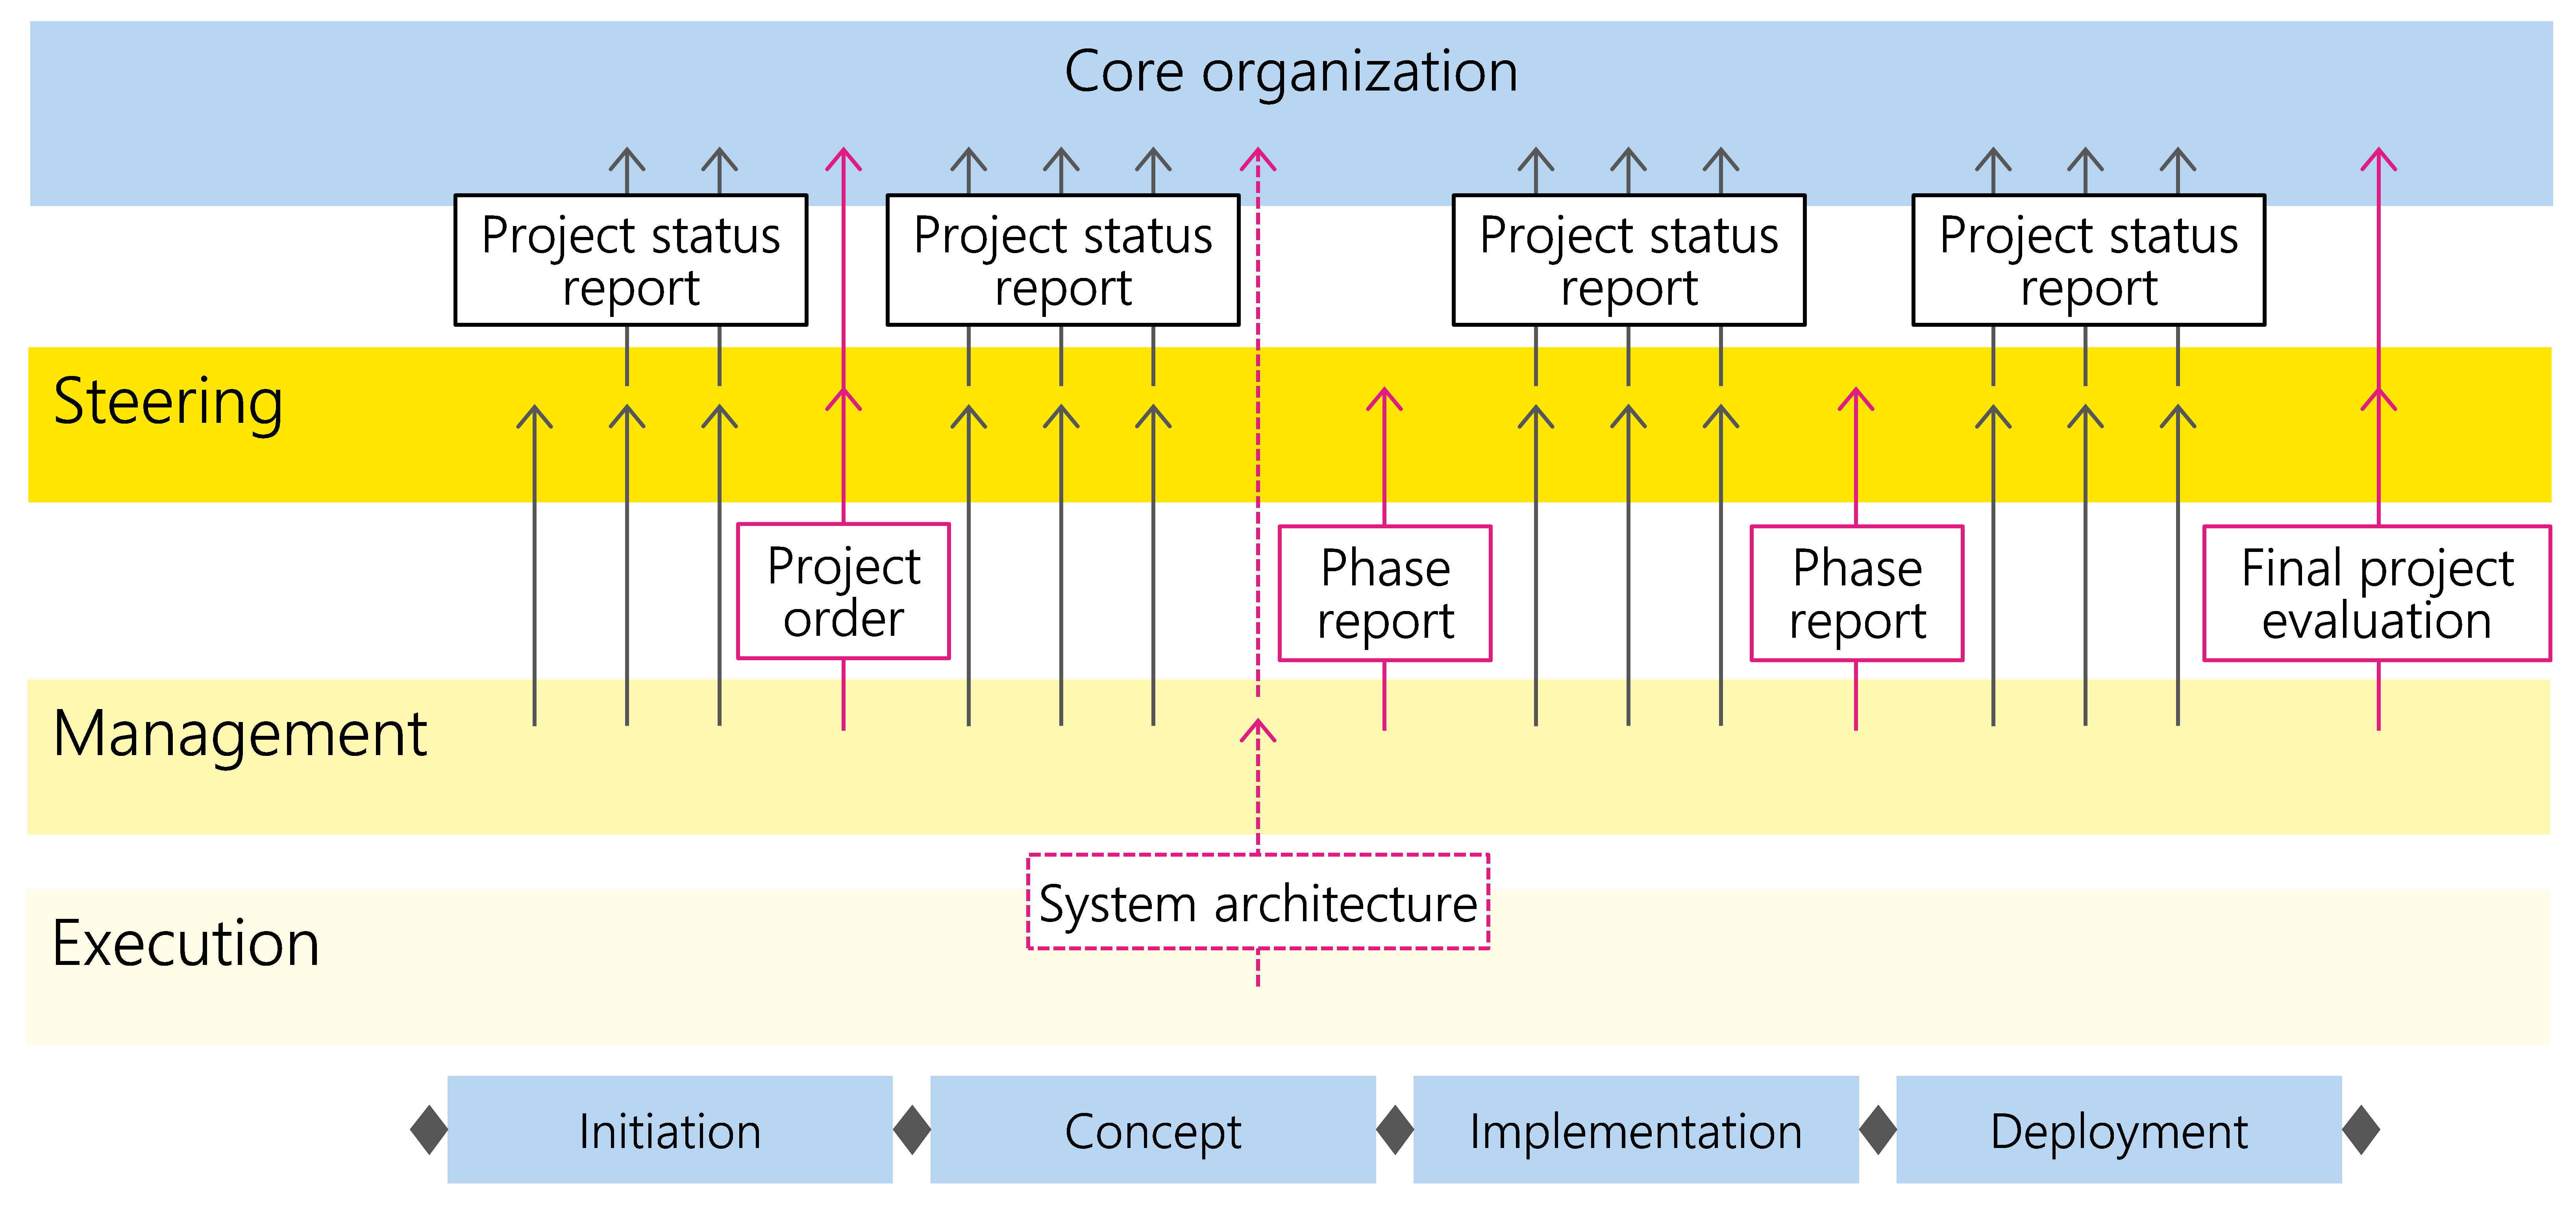 Figure 27: Project reporting vis-à-vis the core organization